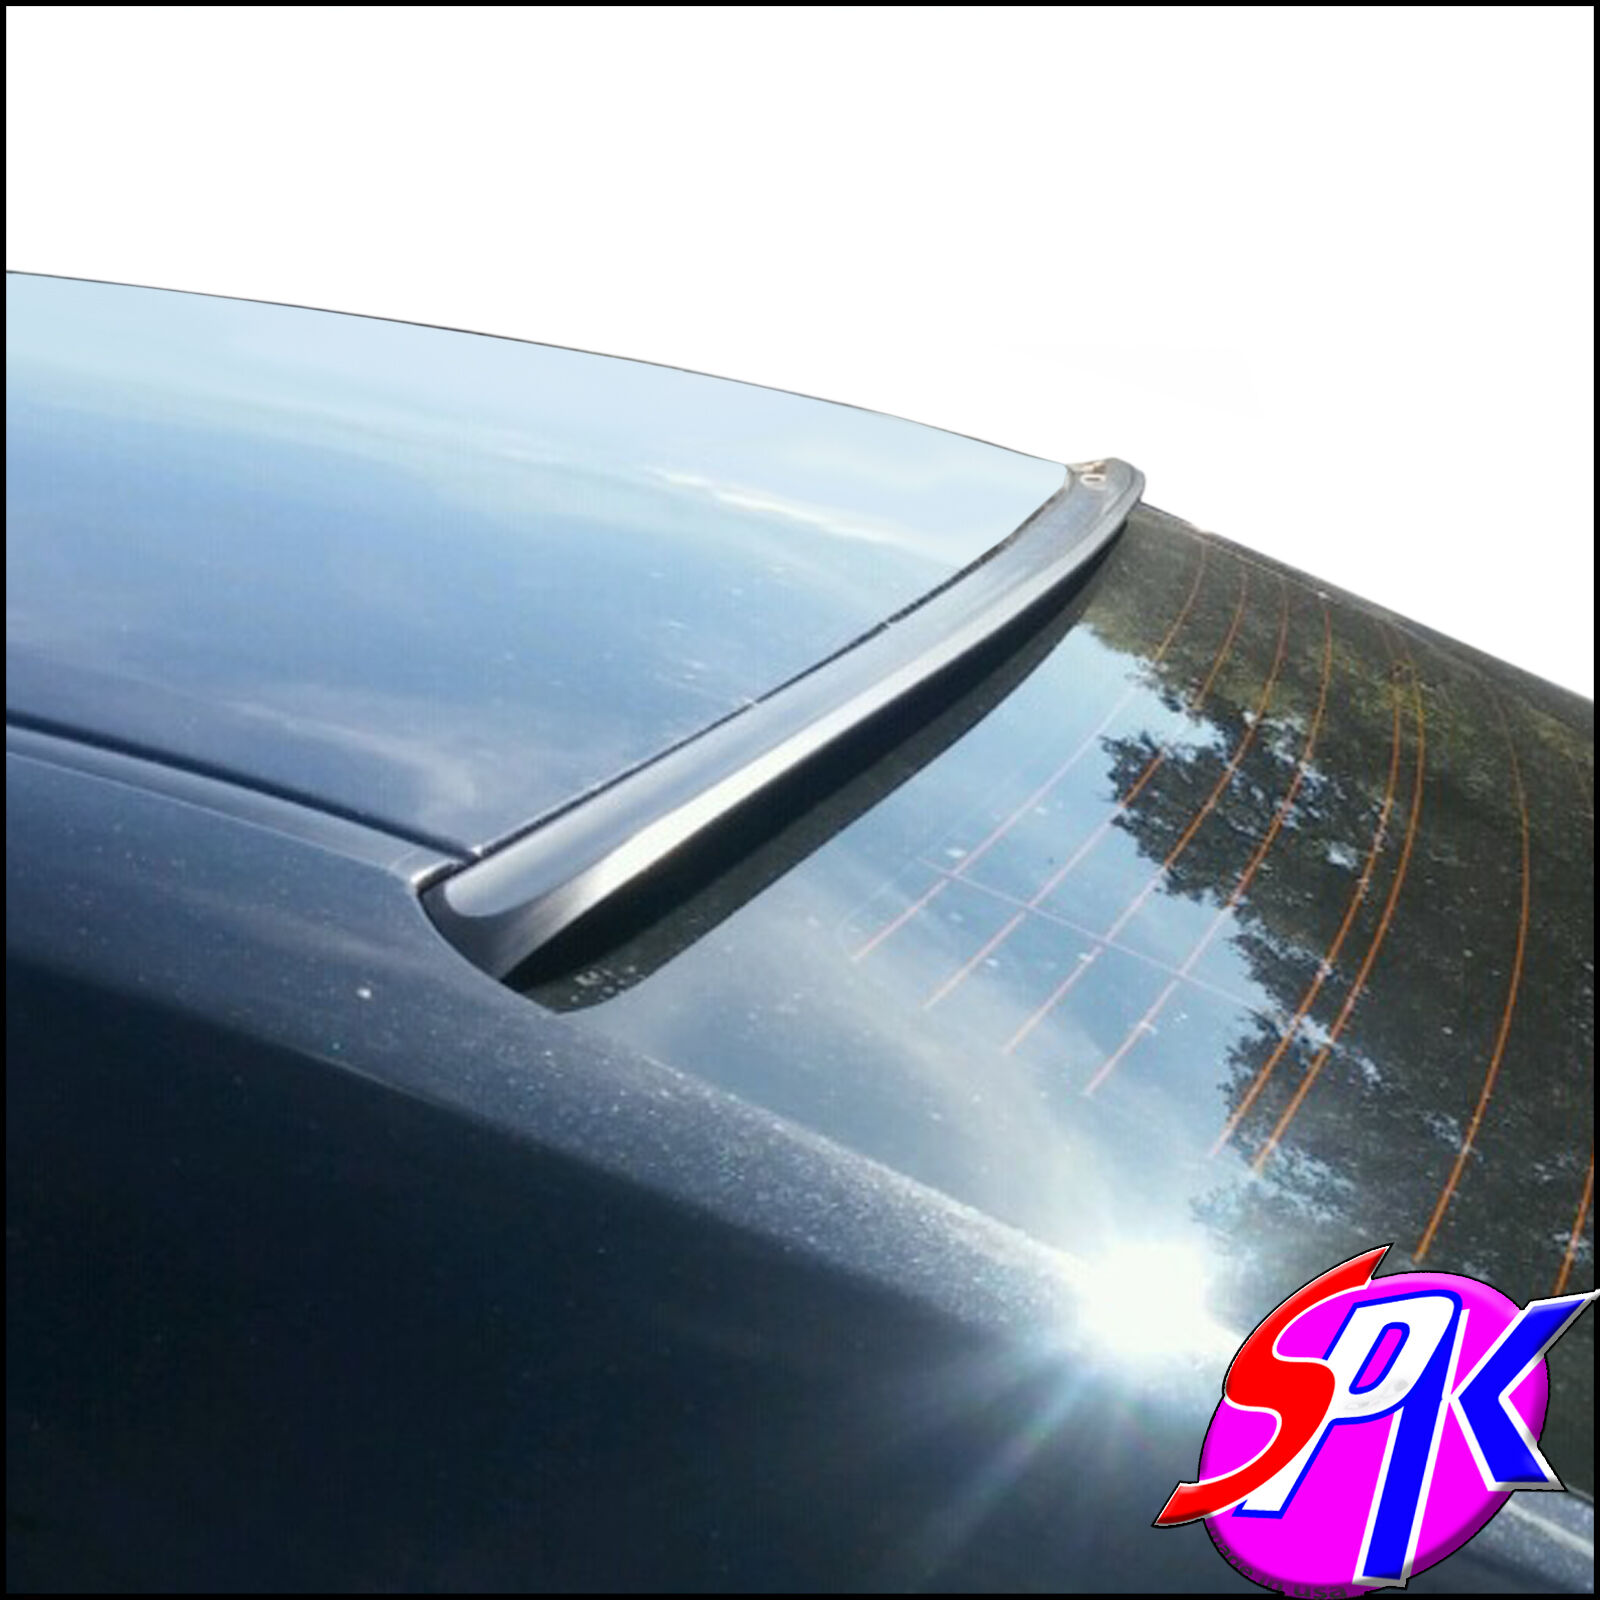 SPK 244R Fits: Honda Accord 2003-2007 4dr Polyurethane Rear Roof Window Spoiler